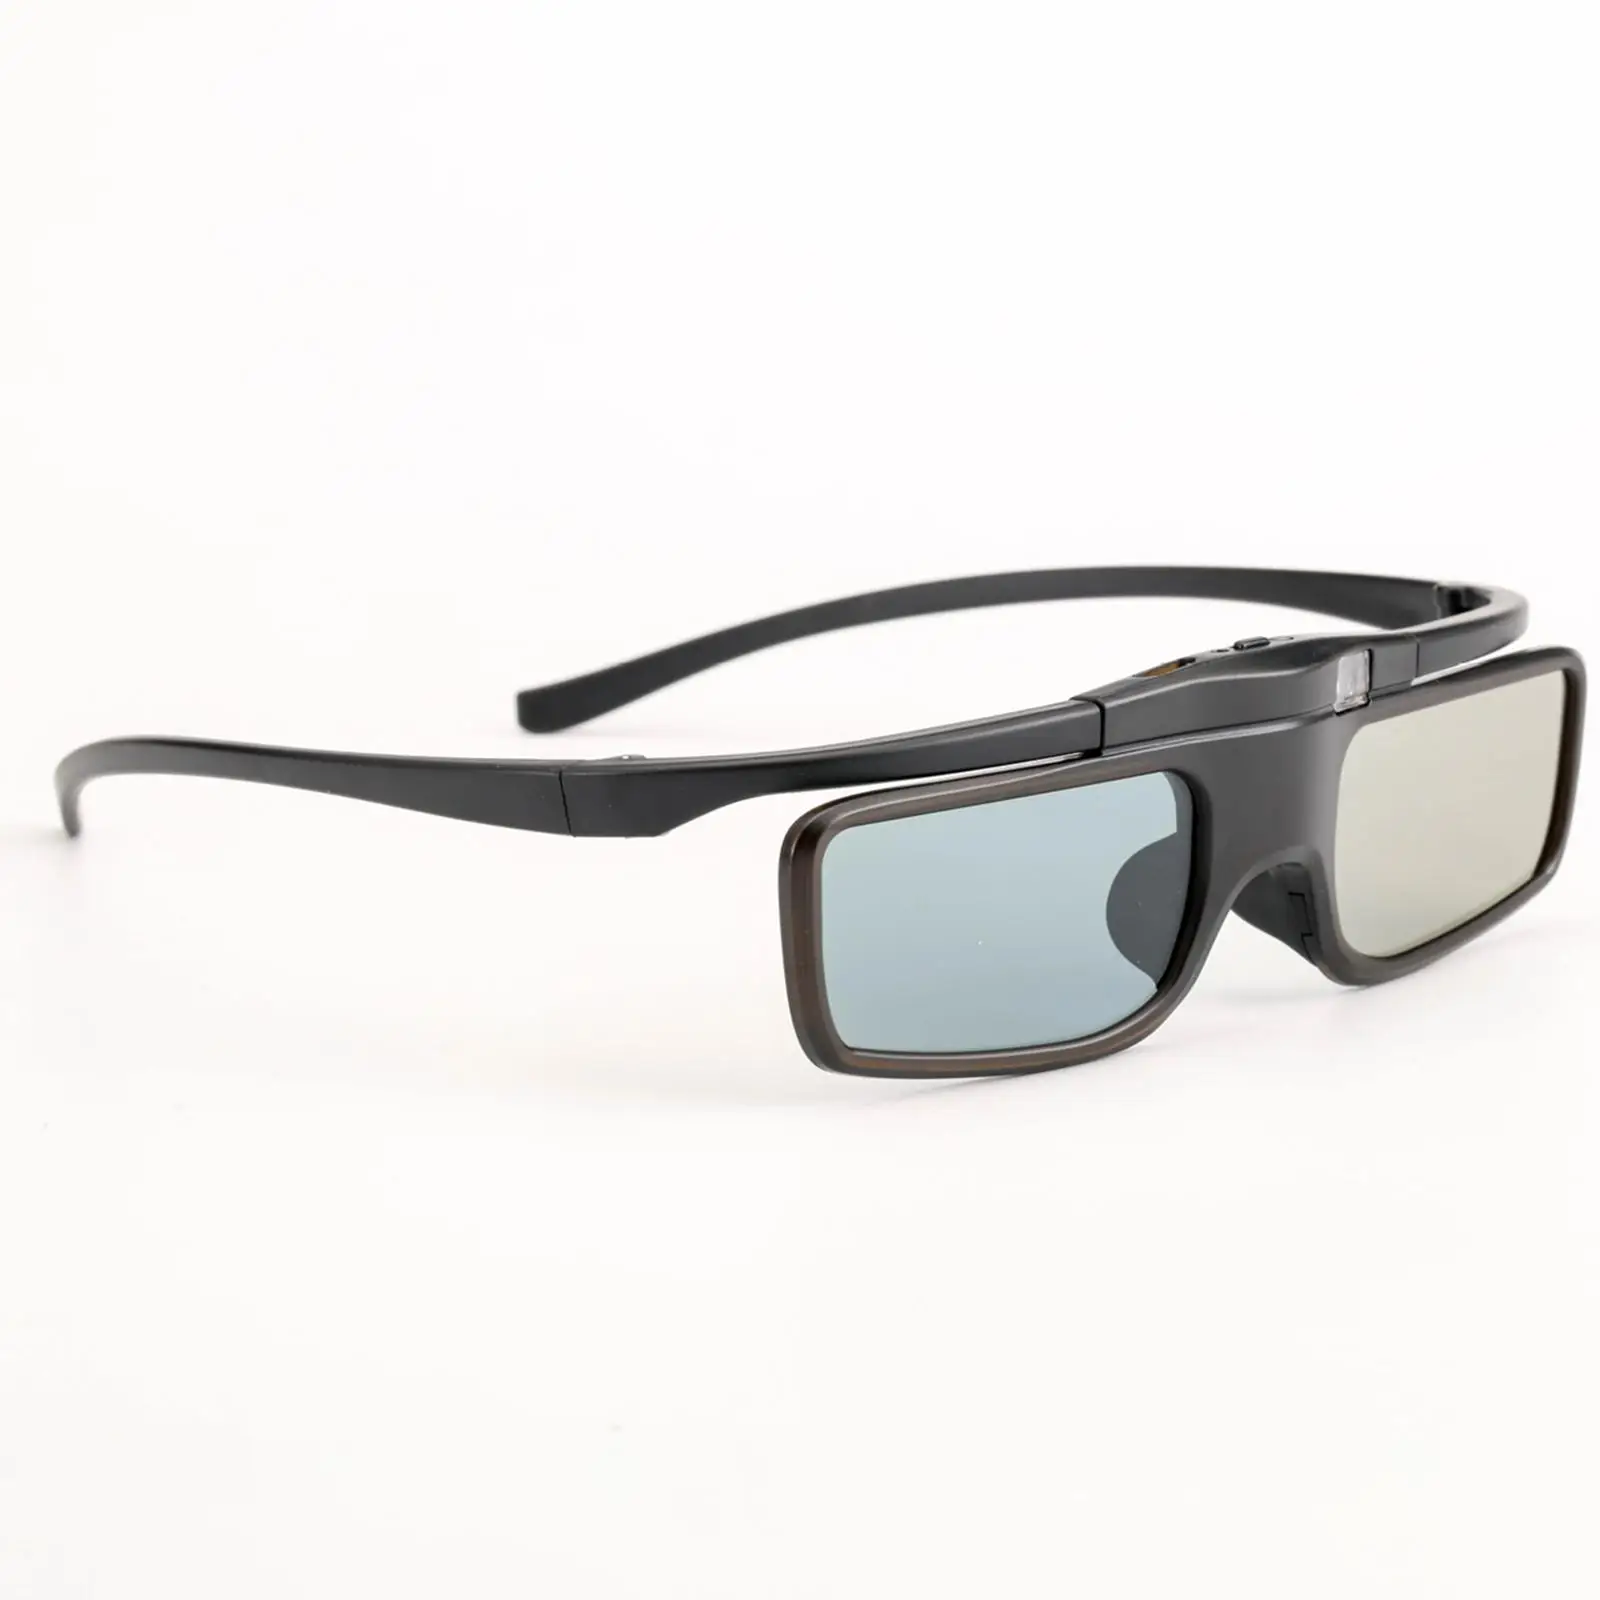 3D  Eyewear Glasses USB Glasses for 3D Signal TV TW52400 TW5600/8200 TW9300 HW48ES/68ES VW558/328/268 VW350ES/1100ES